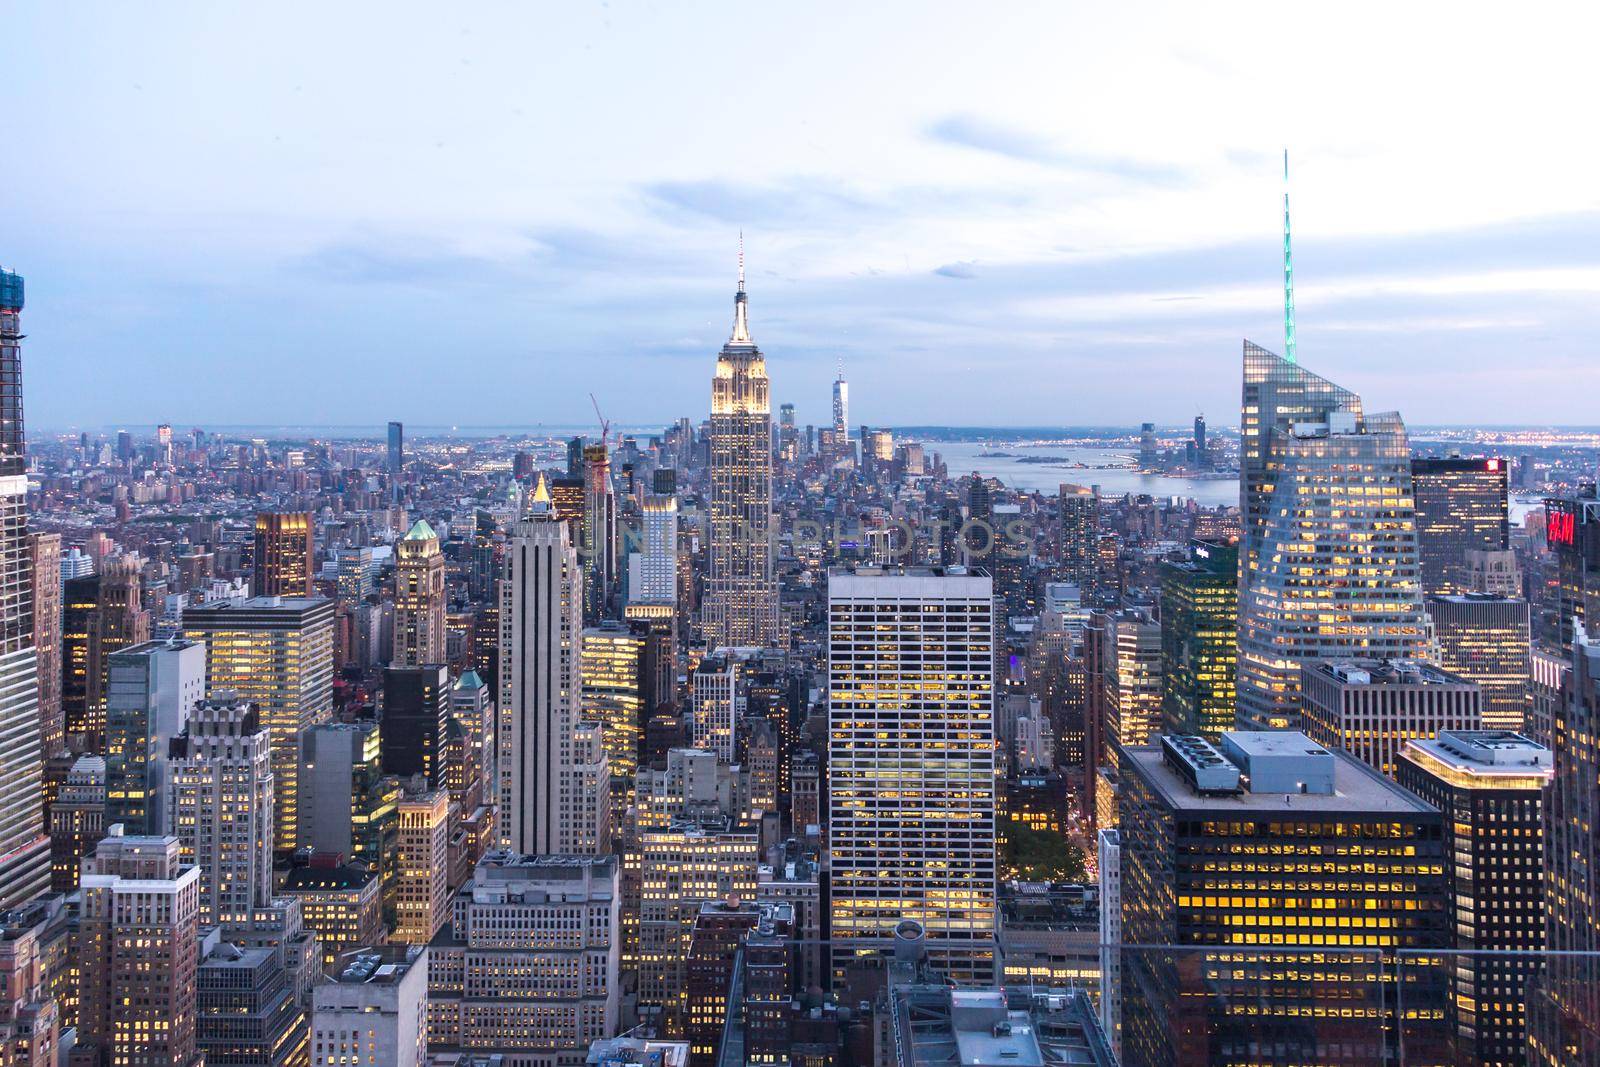 NEW YORK, USA - MAY 15, 2019: Aerial view of New York city at night, Manhattan, the USA